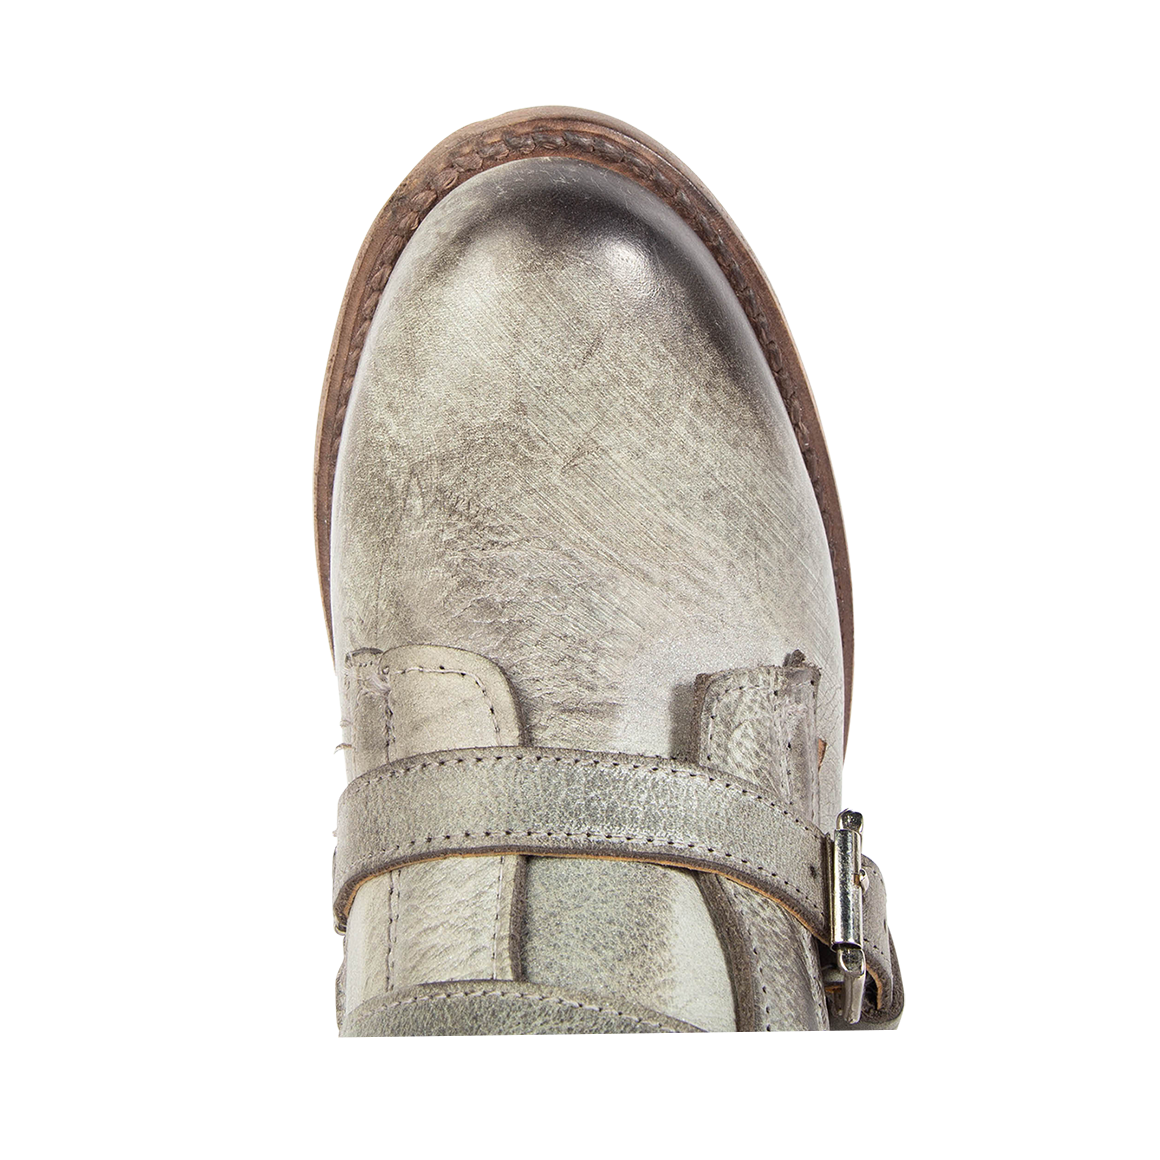 Top view showing almond toe on FREEBIRD women's Raine stone leather bootie